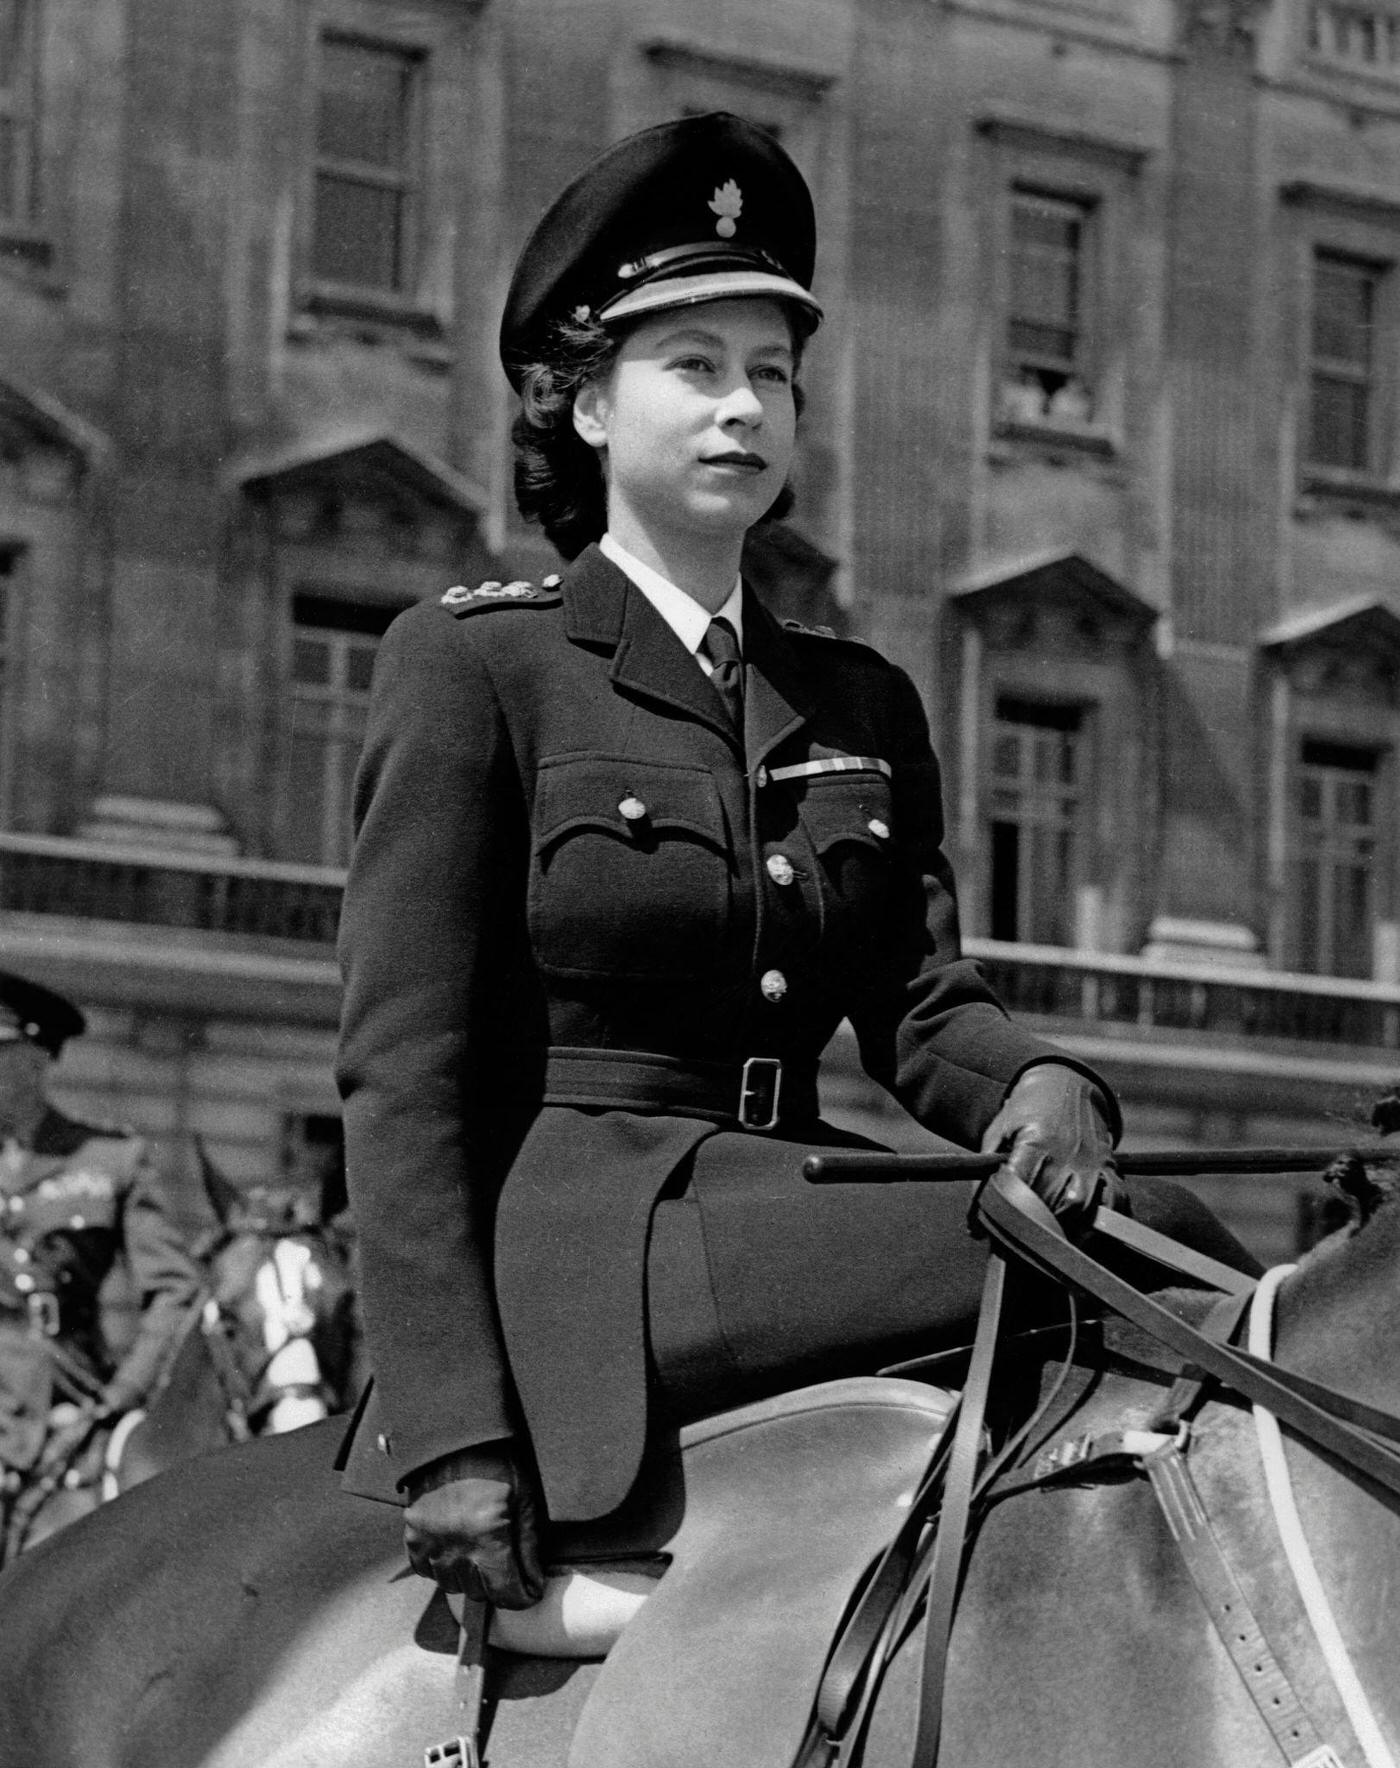 Princess Elizabeth (the future Queen Elizabeth II) outside Buckingham Palace, London, England, 12 June 1947.